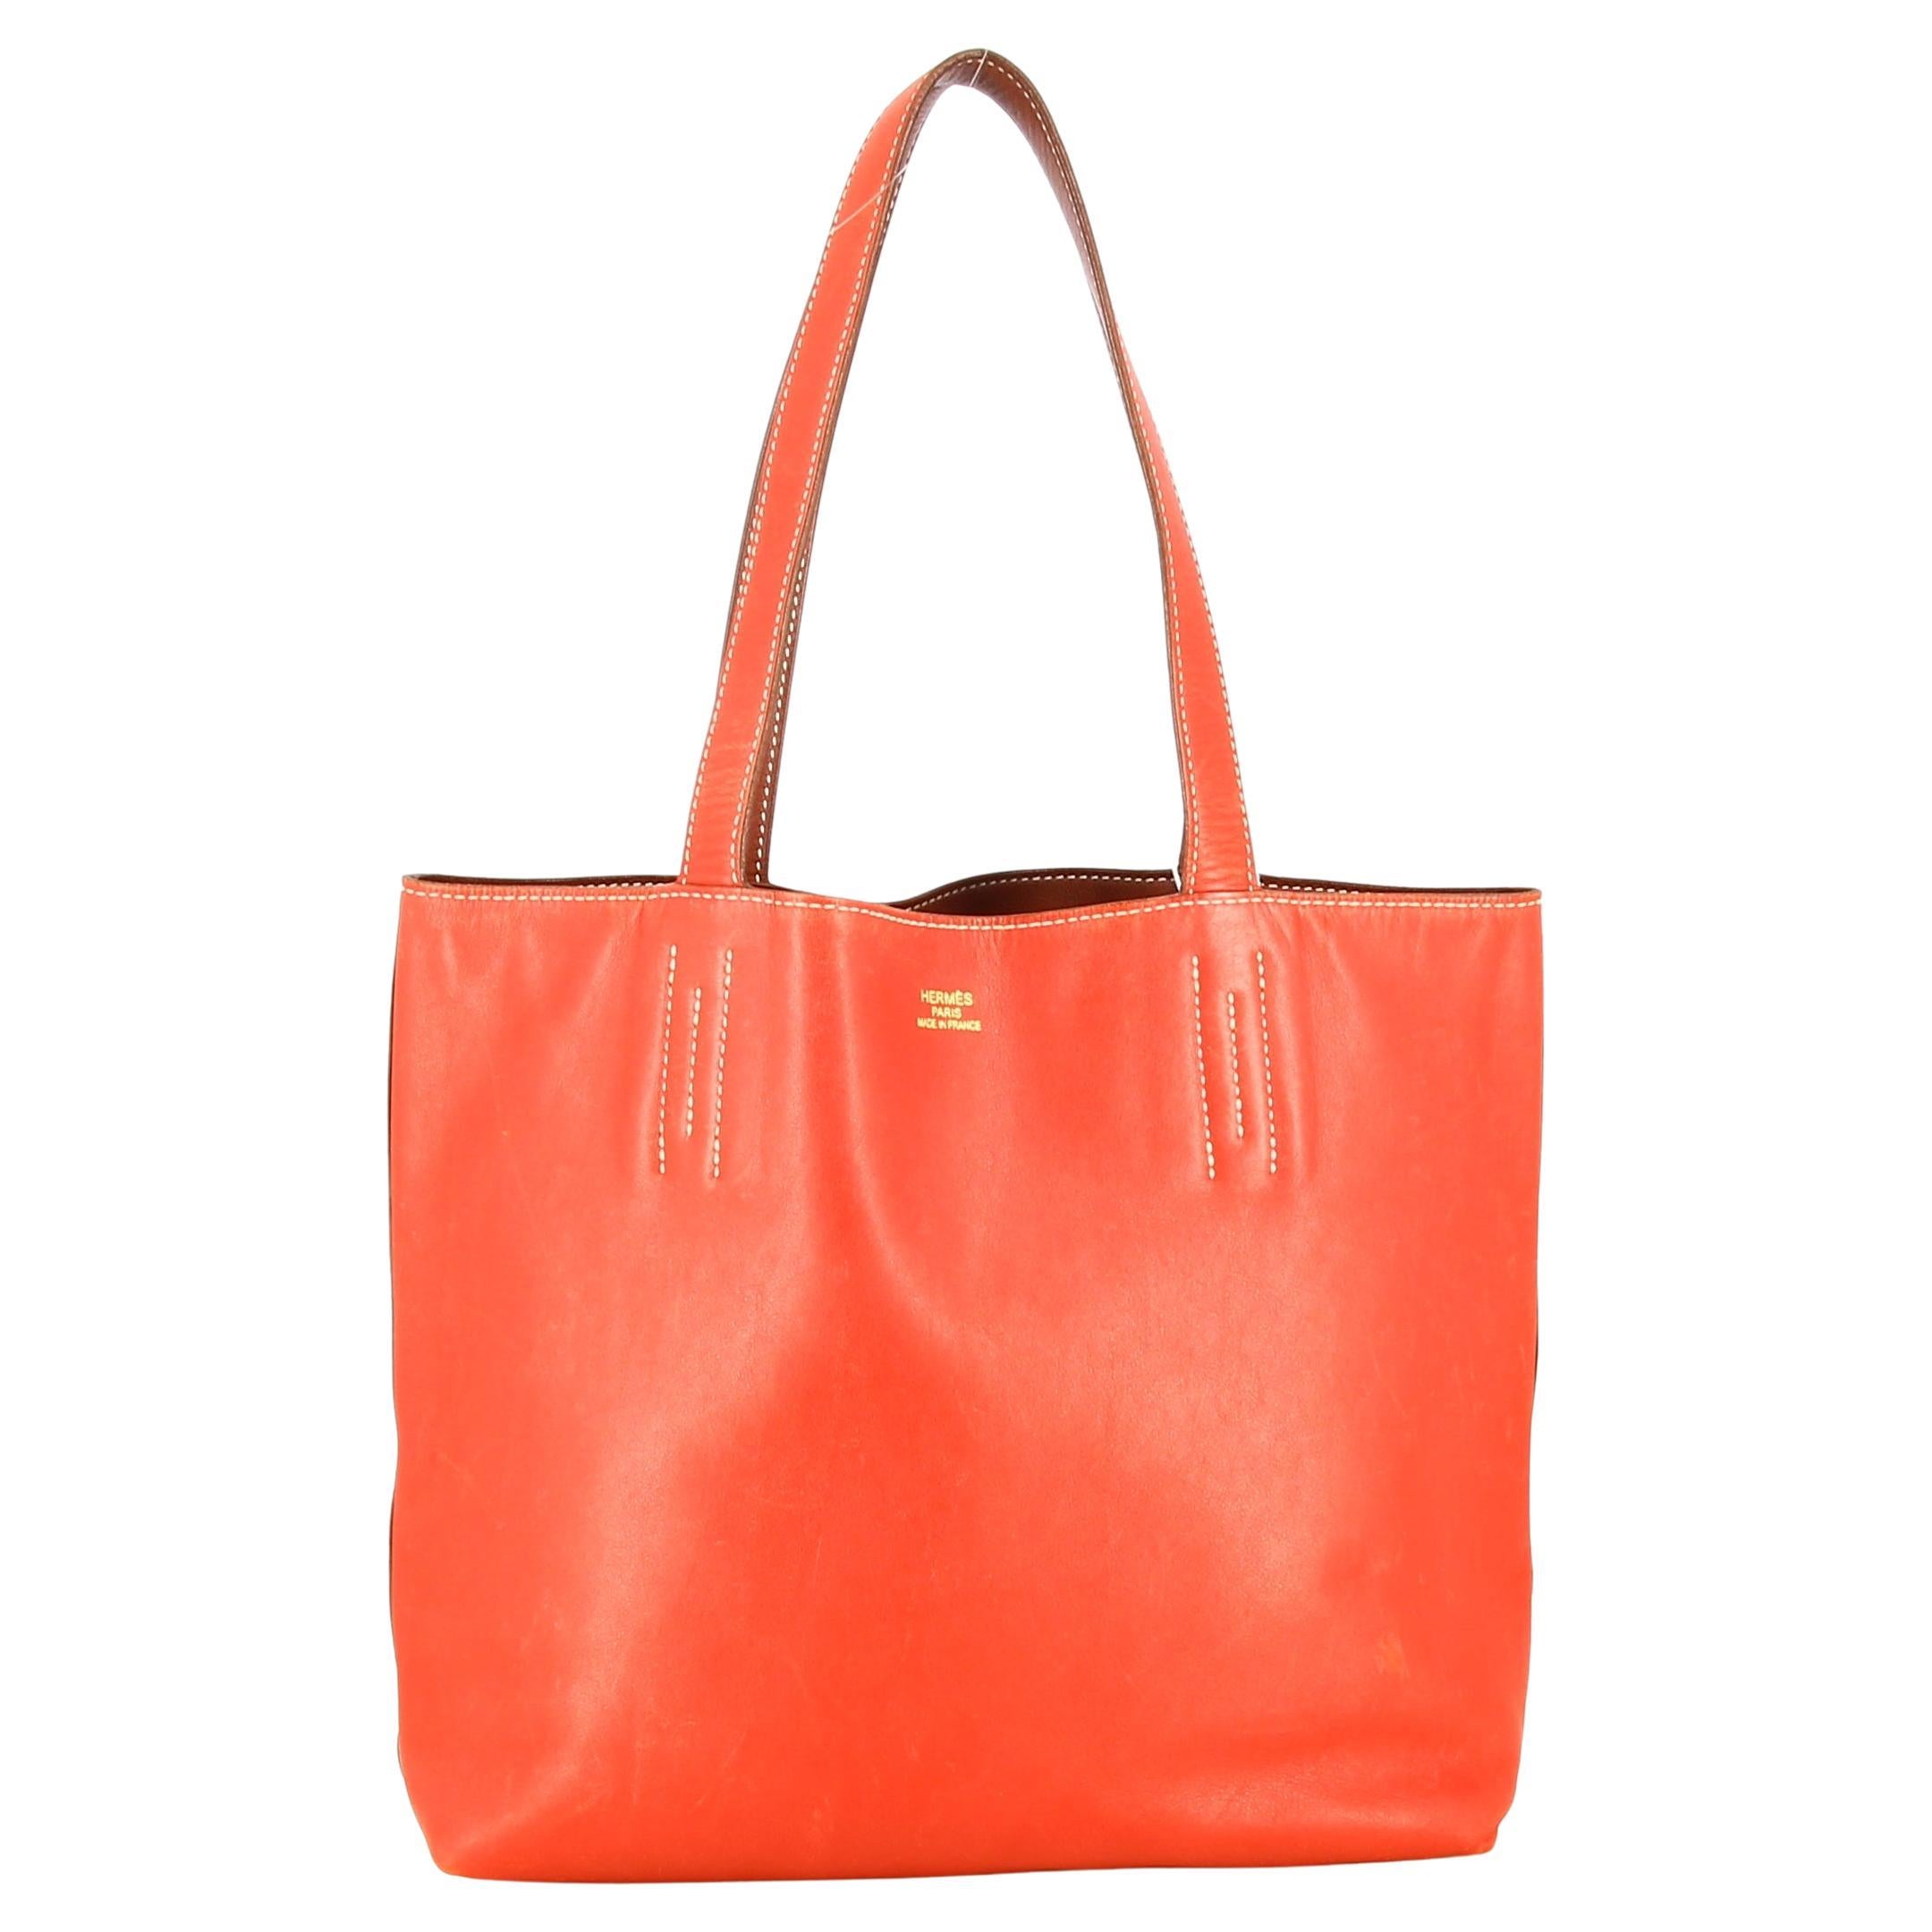 2003 Hermès Red Leather Handbag   Double sens For Sale